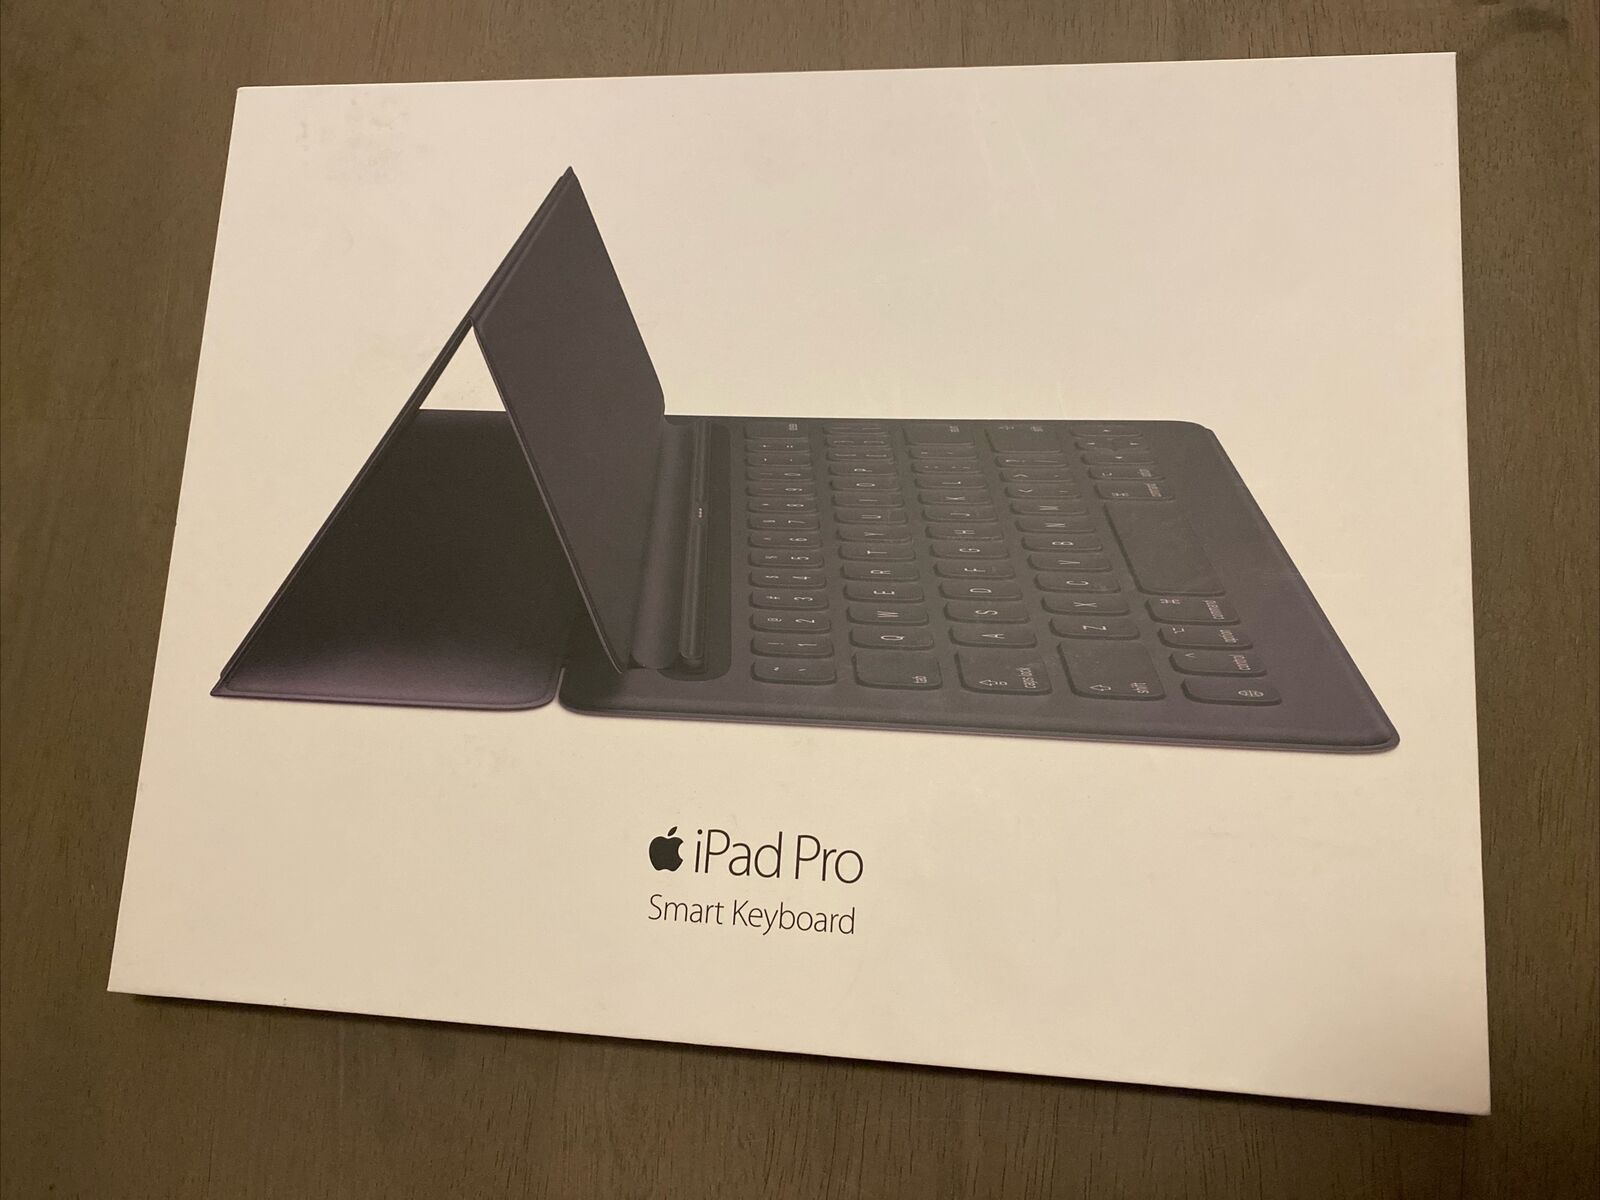 Apple iPad Pro Smart Keyboard EMPTY BOX - No Apple Keyboard Included